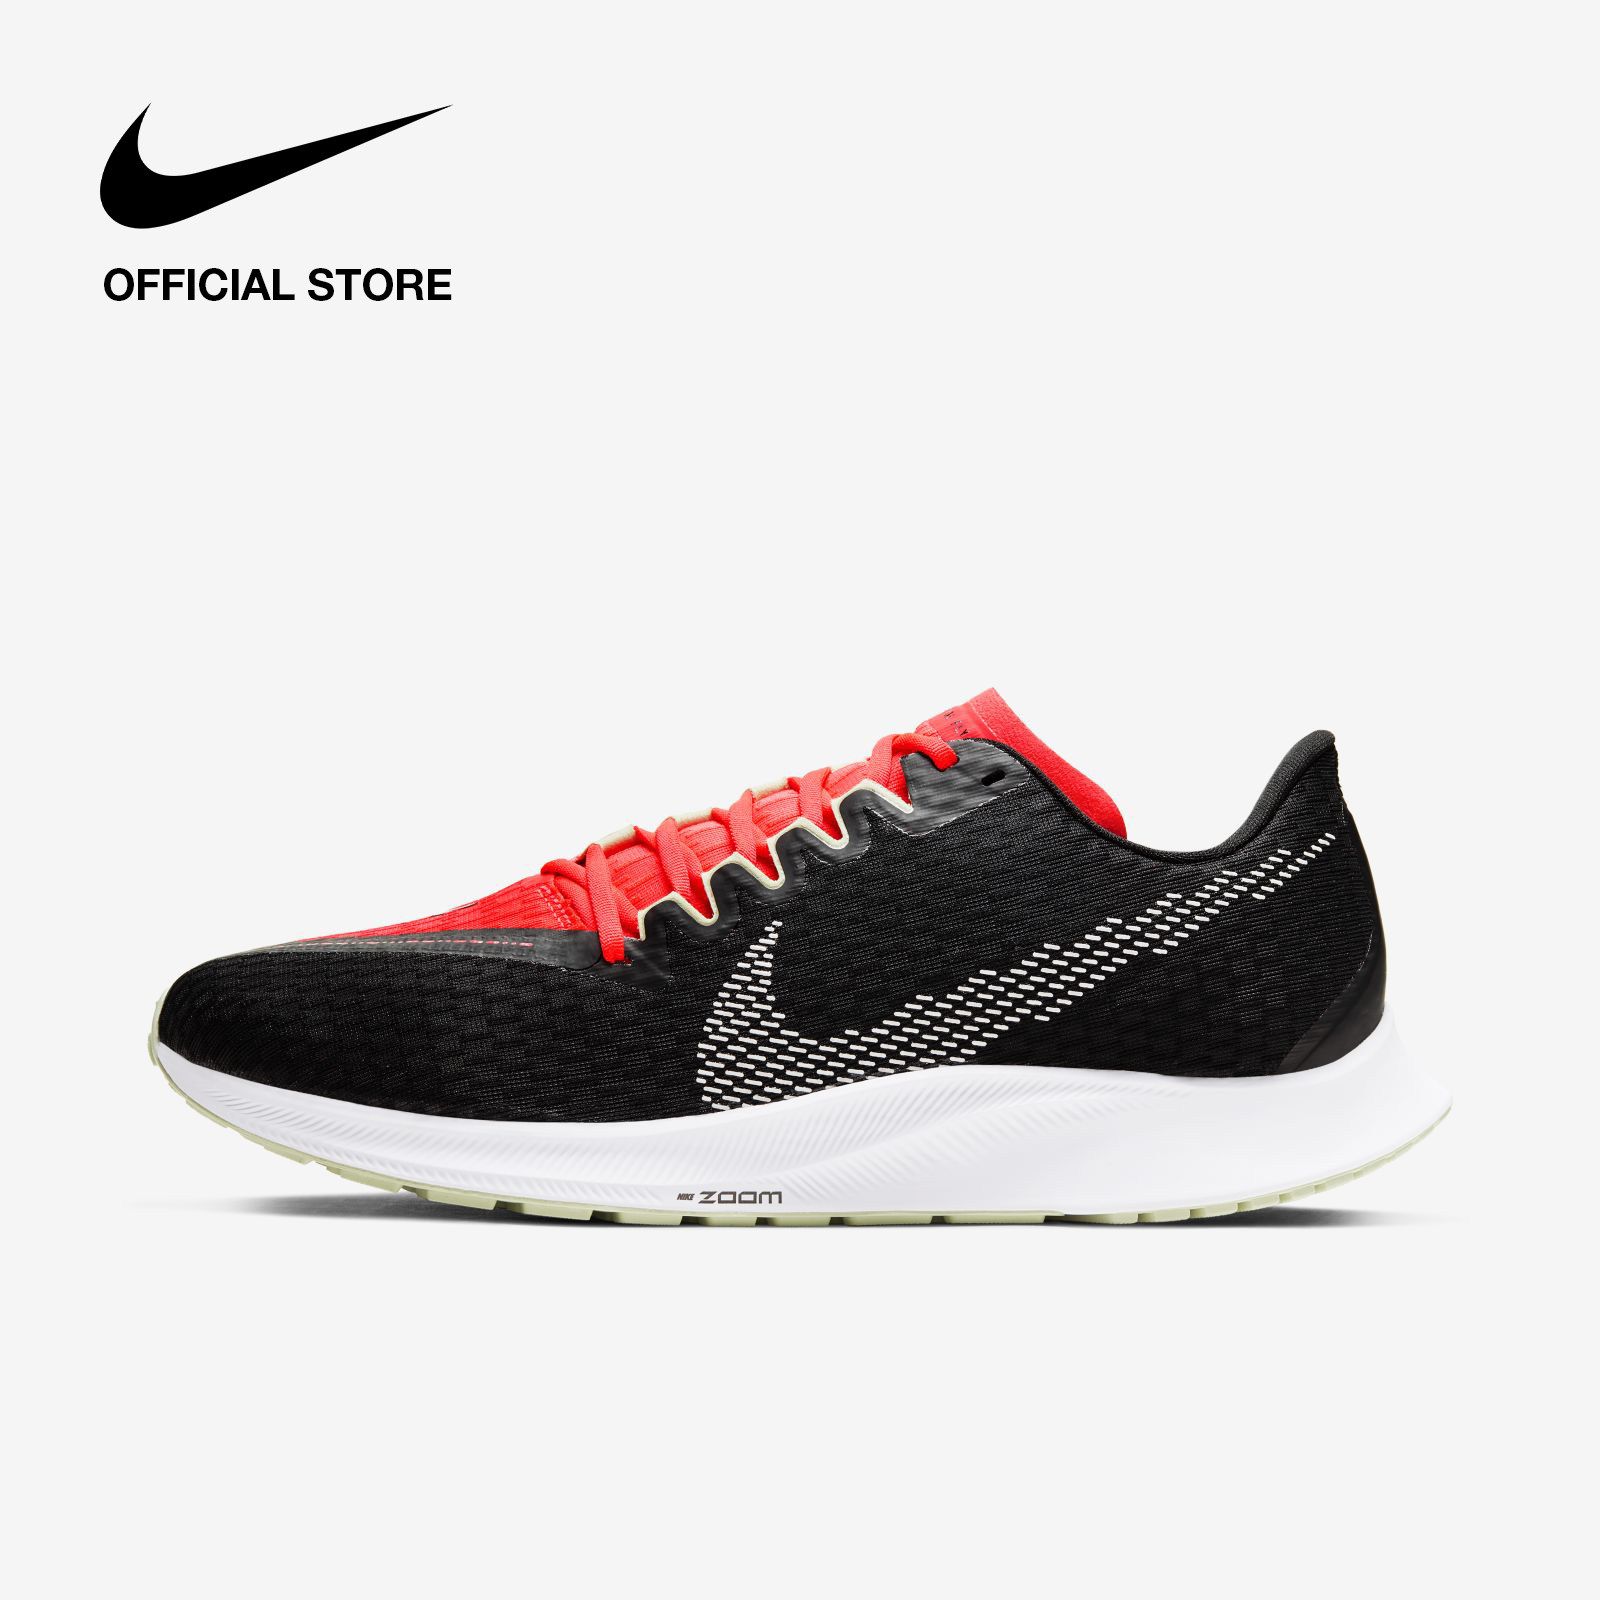 Nike Men's Zoom Rival Fly 2 Running Shoes - Black ไนกี้ รองเท้าวิ่งผู้ชาย ซูม ไรเวิล ฟลาย 2 - สีดำ